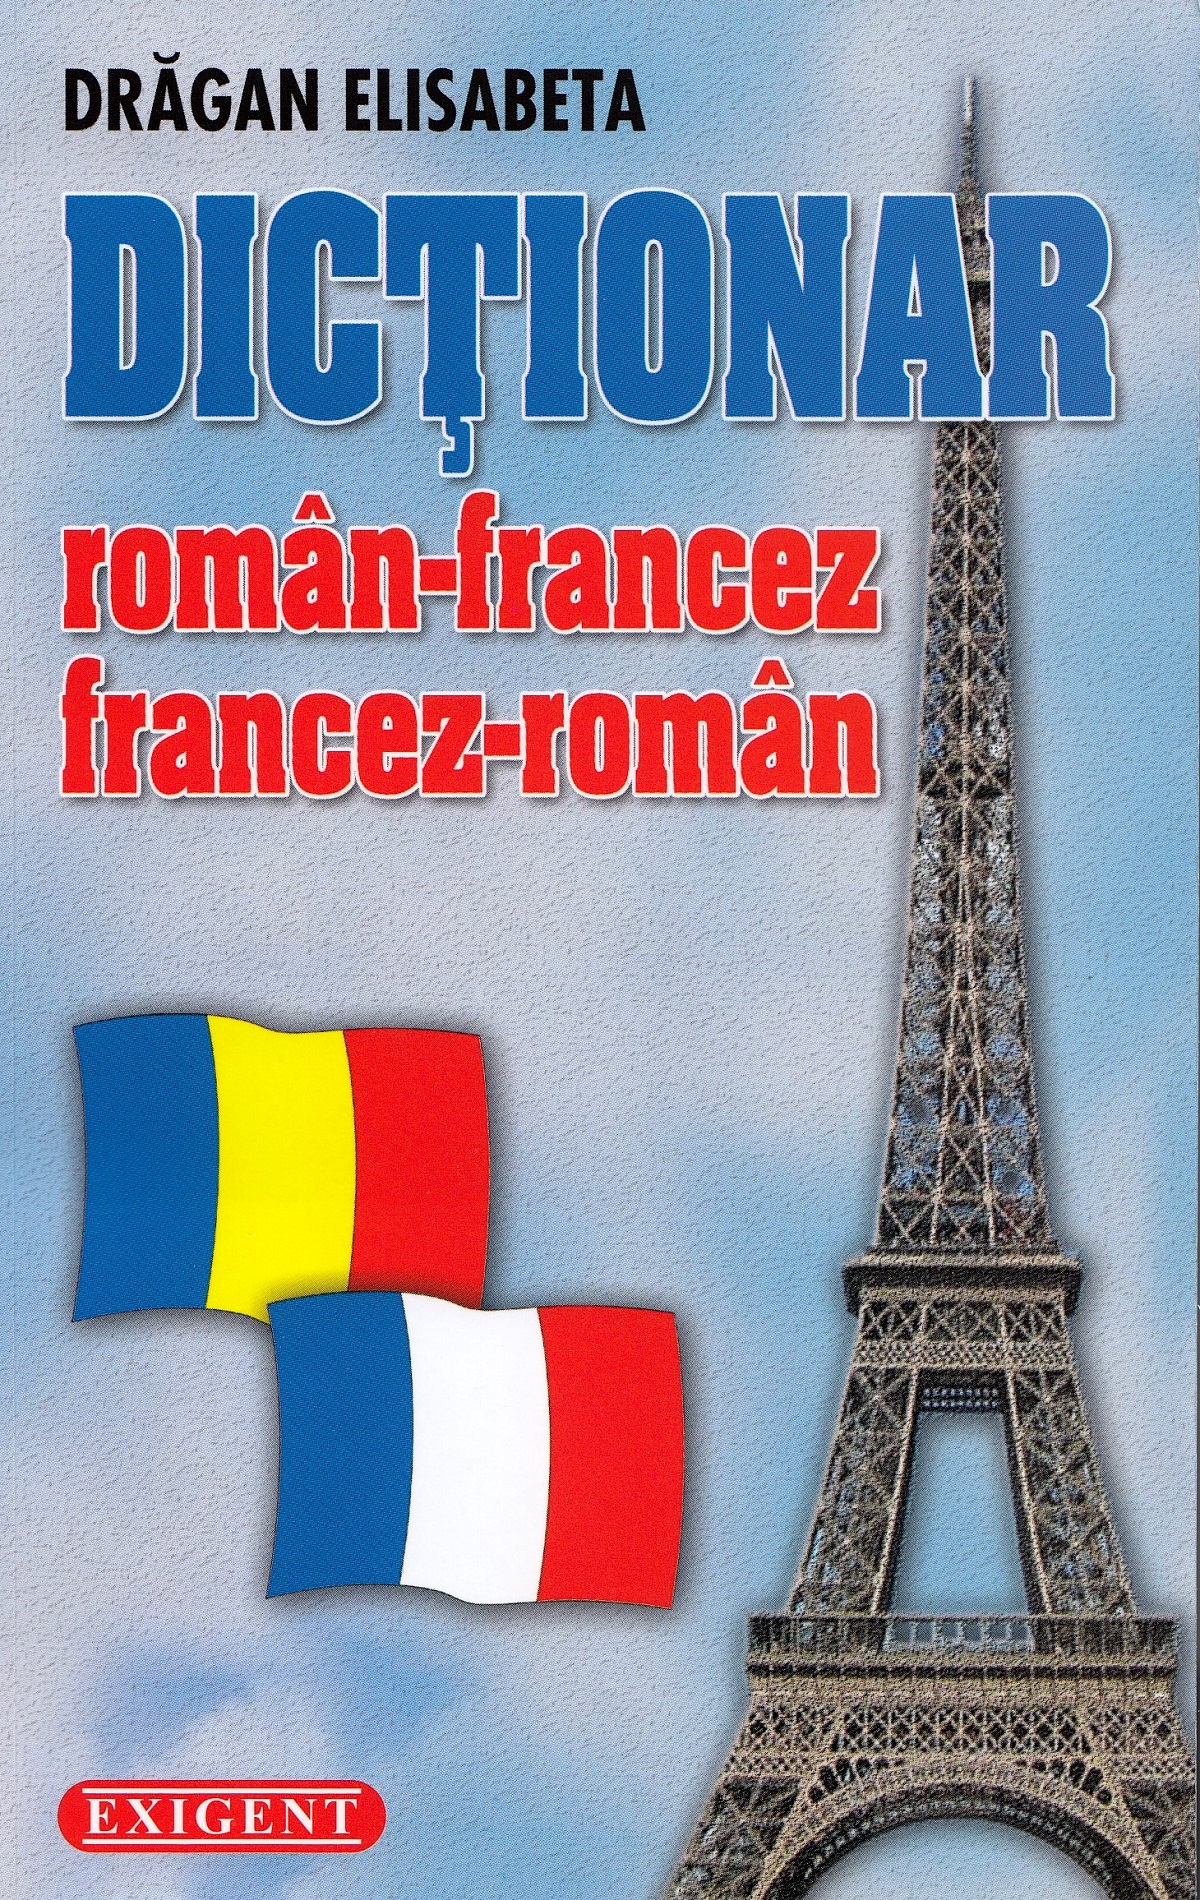 Dictionar roman-francez, francez-roman - Dragan Elisabeta